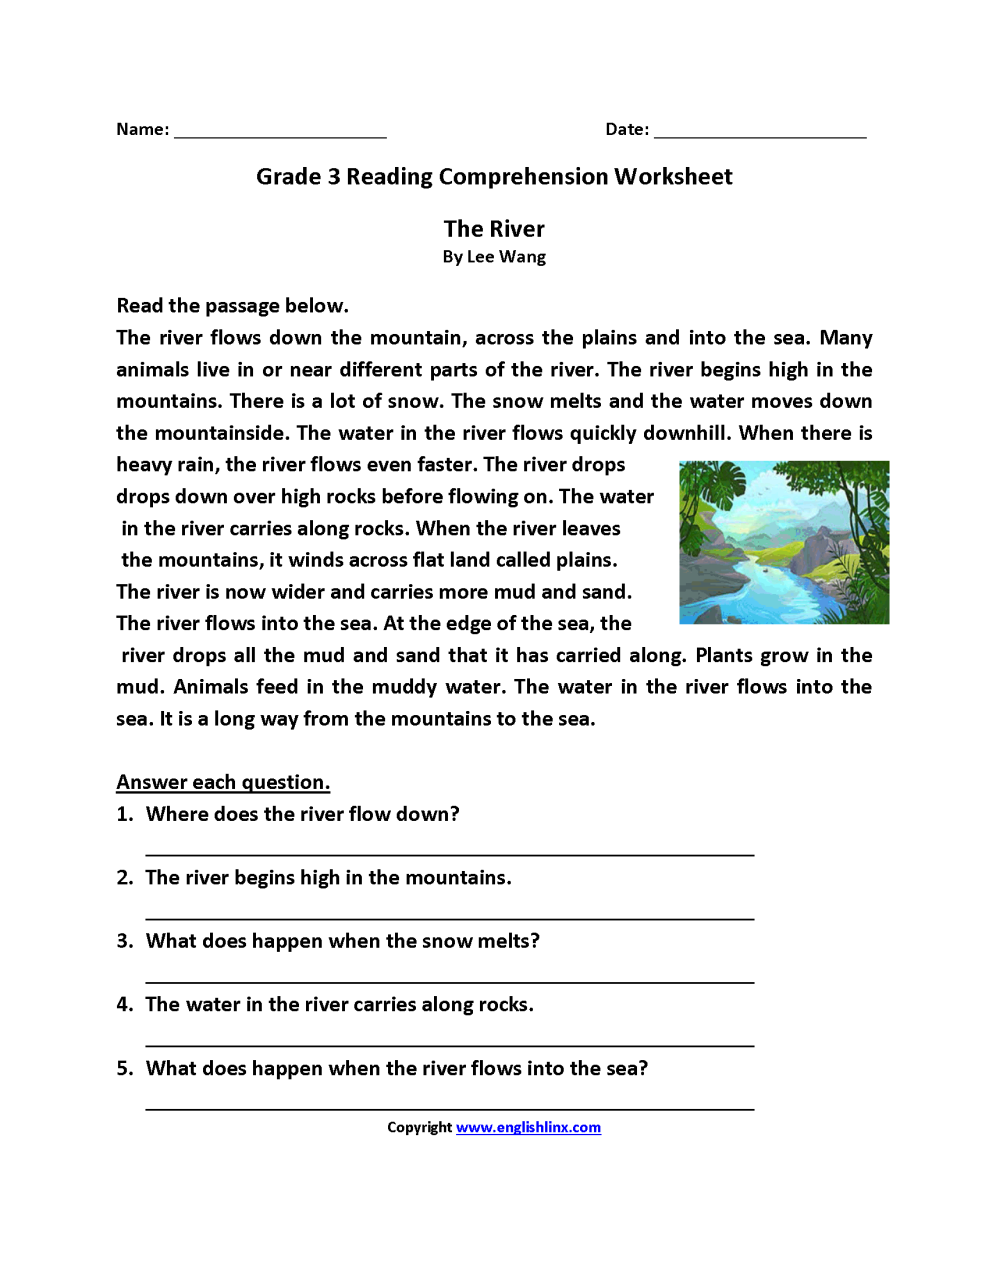 reading-comprehension-activities-for-third-grade-kidsworksheetfun